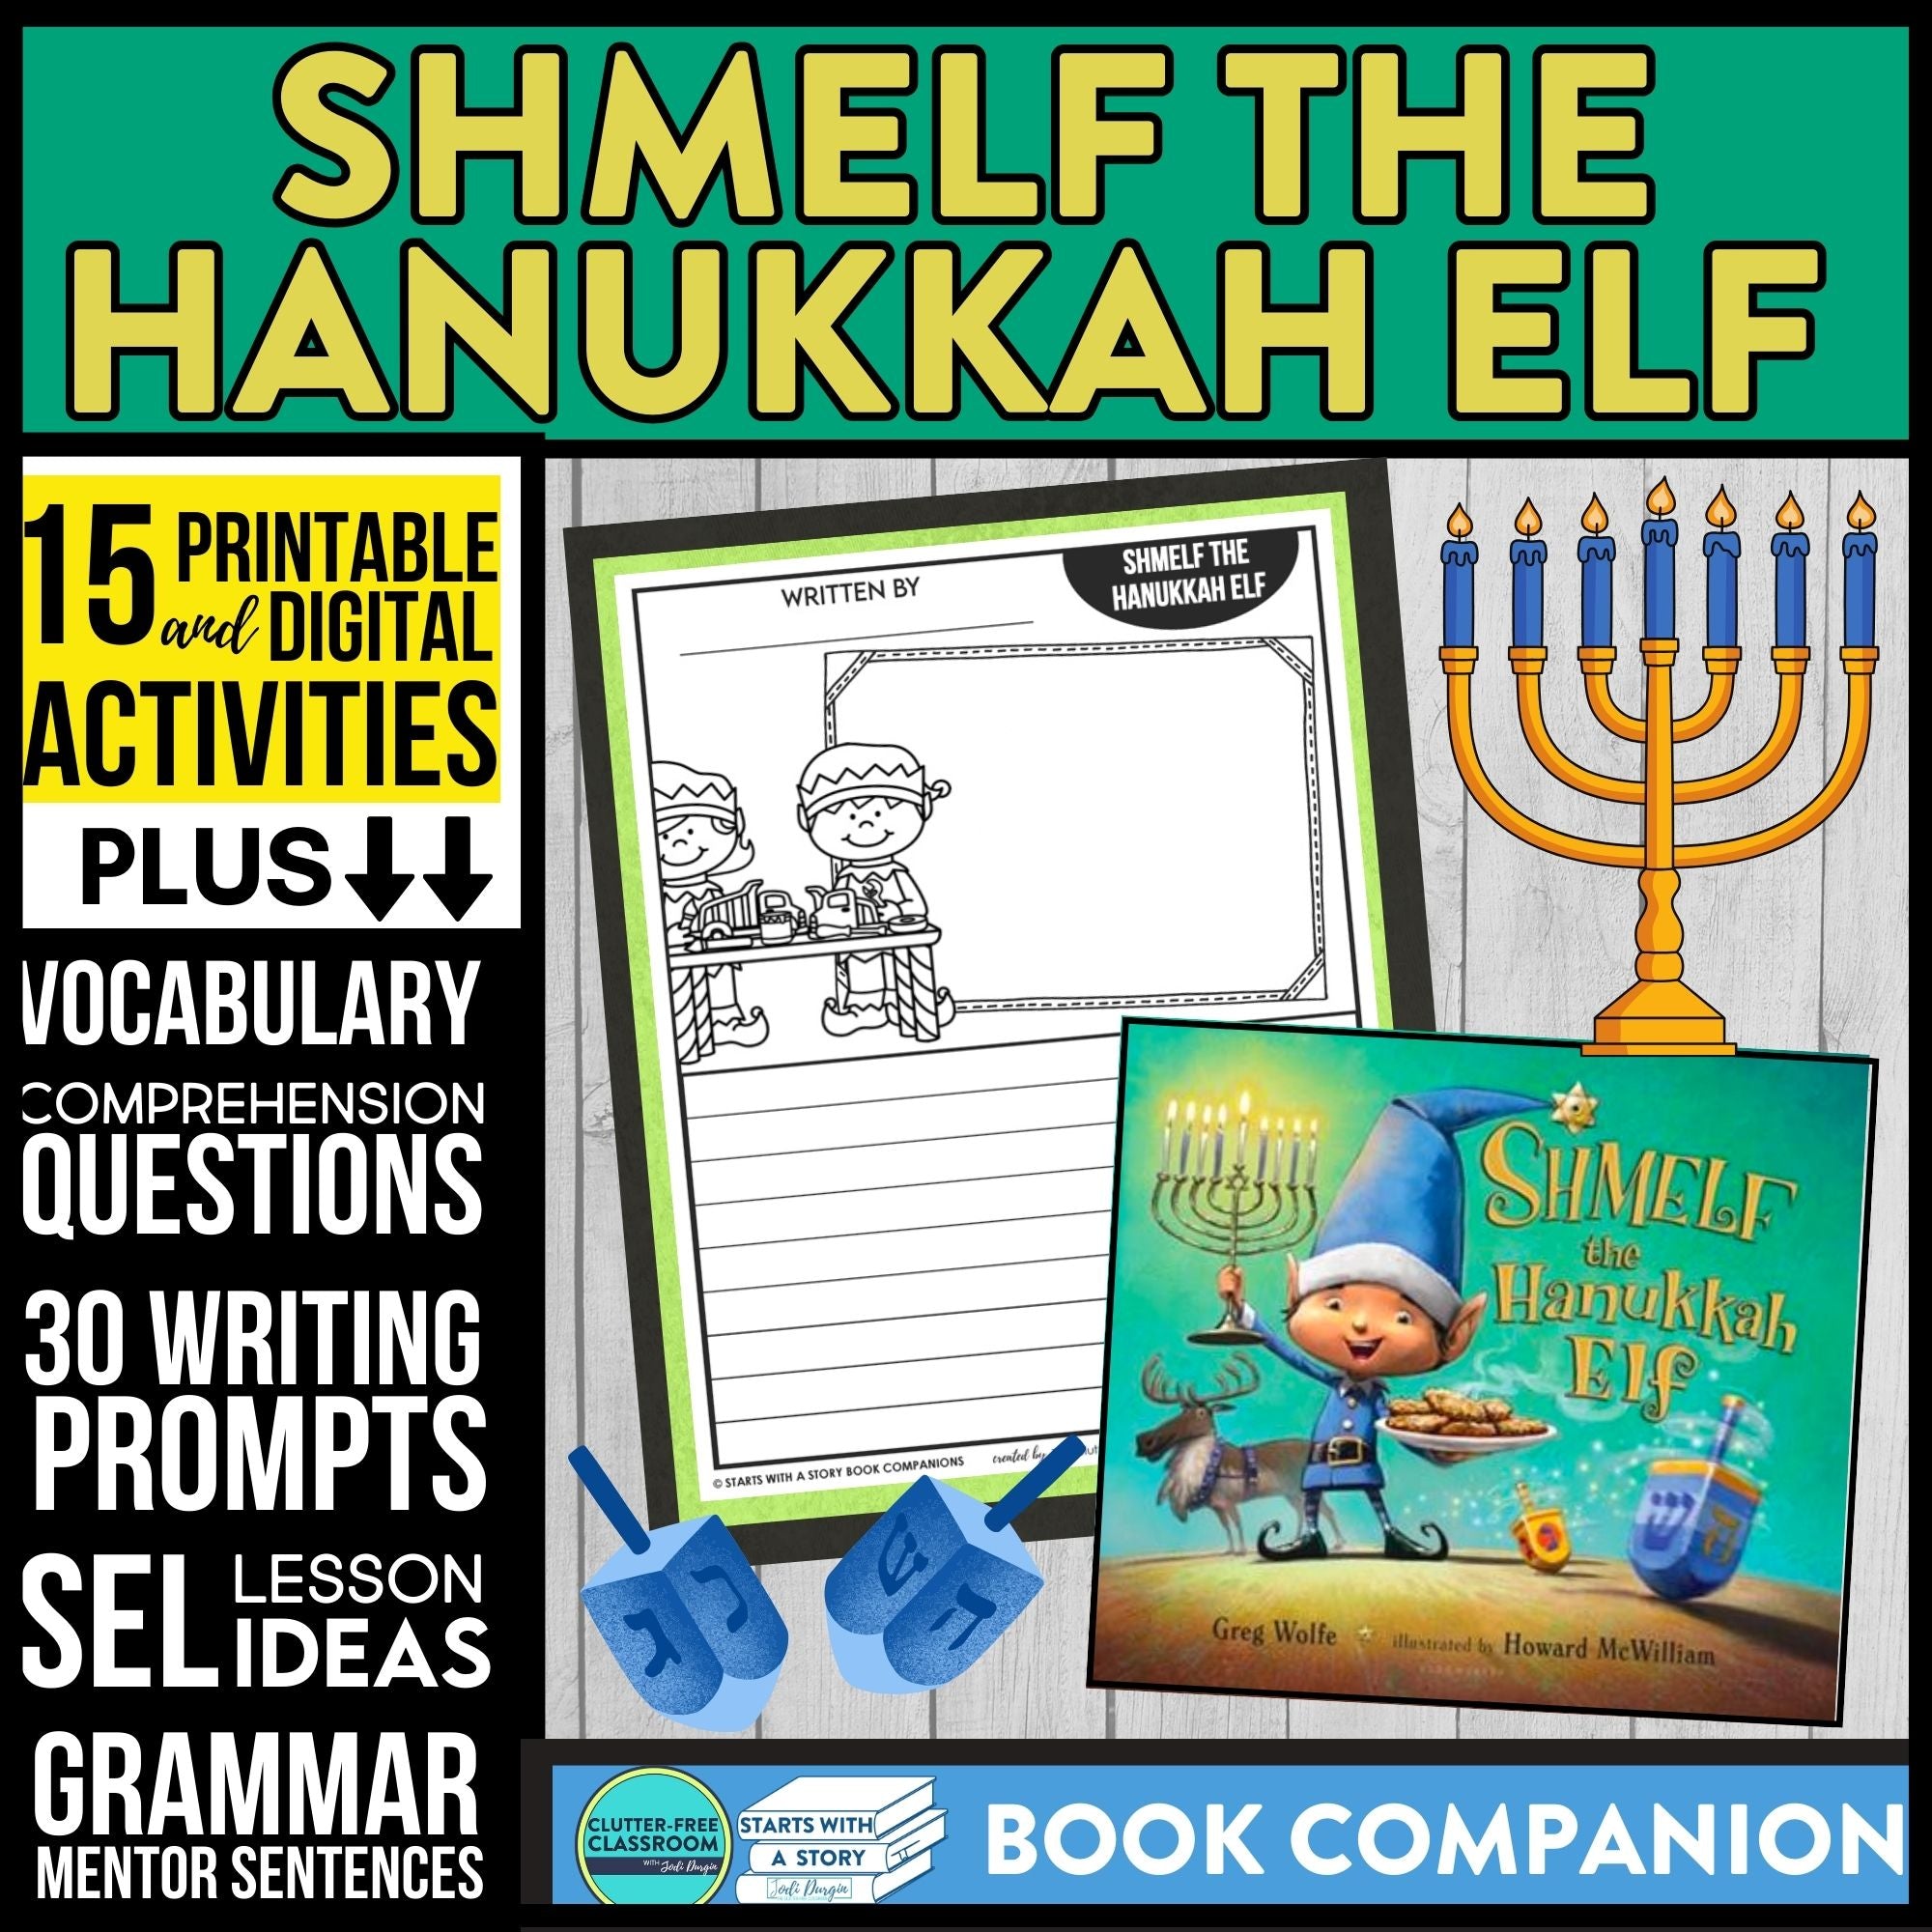 SHMELF THE HANUKKAH ELF activities and lesson plan ideas